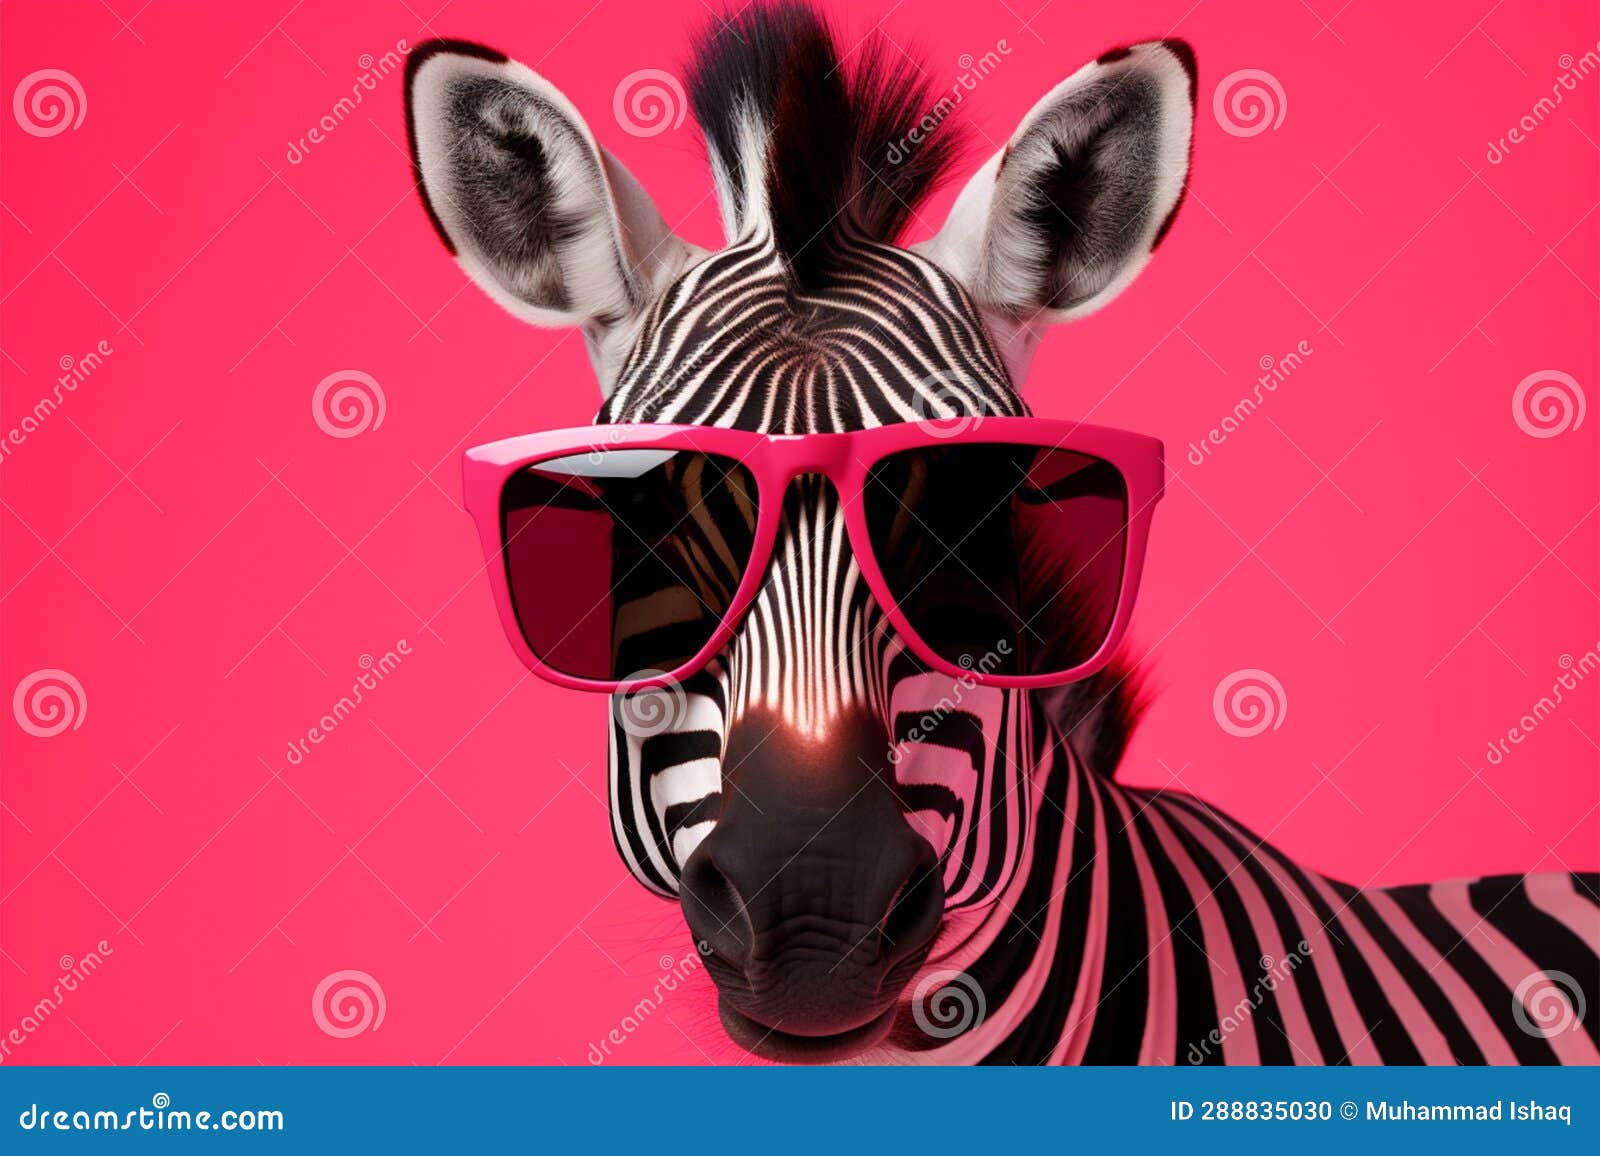 zebra flaunts stylishness in pink sunglasses, exuding a chic vibe